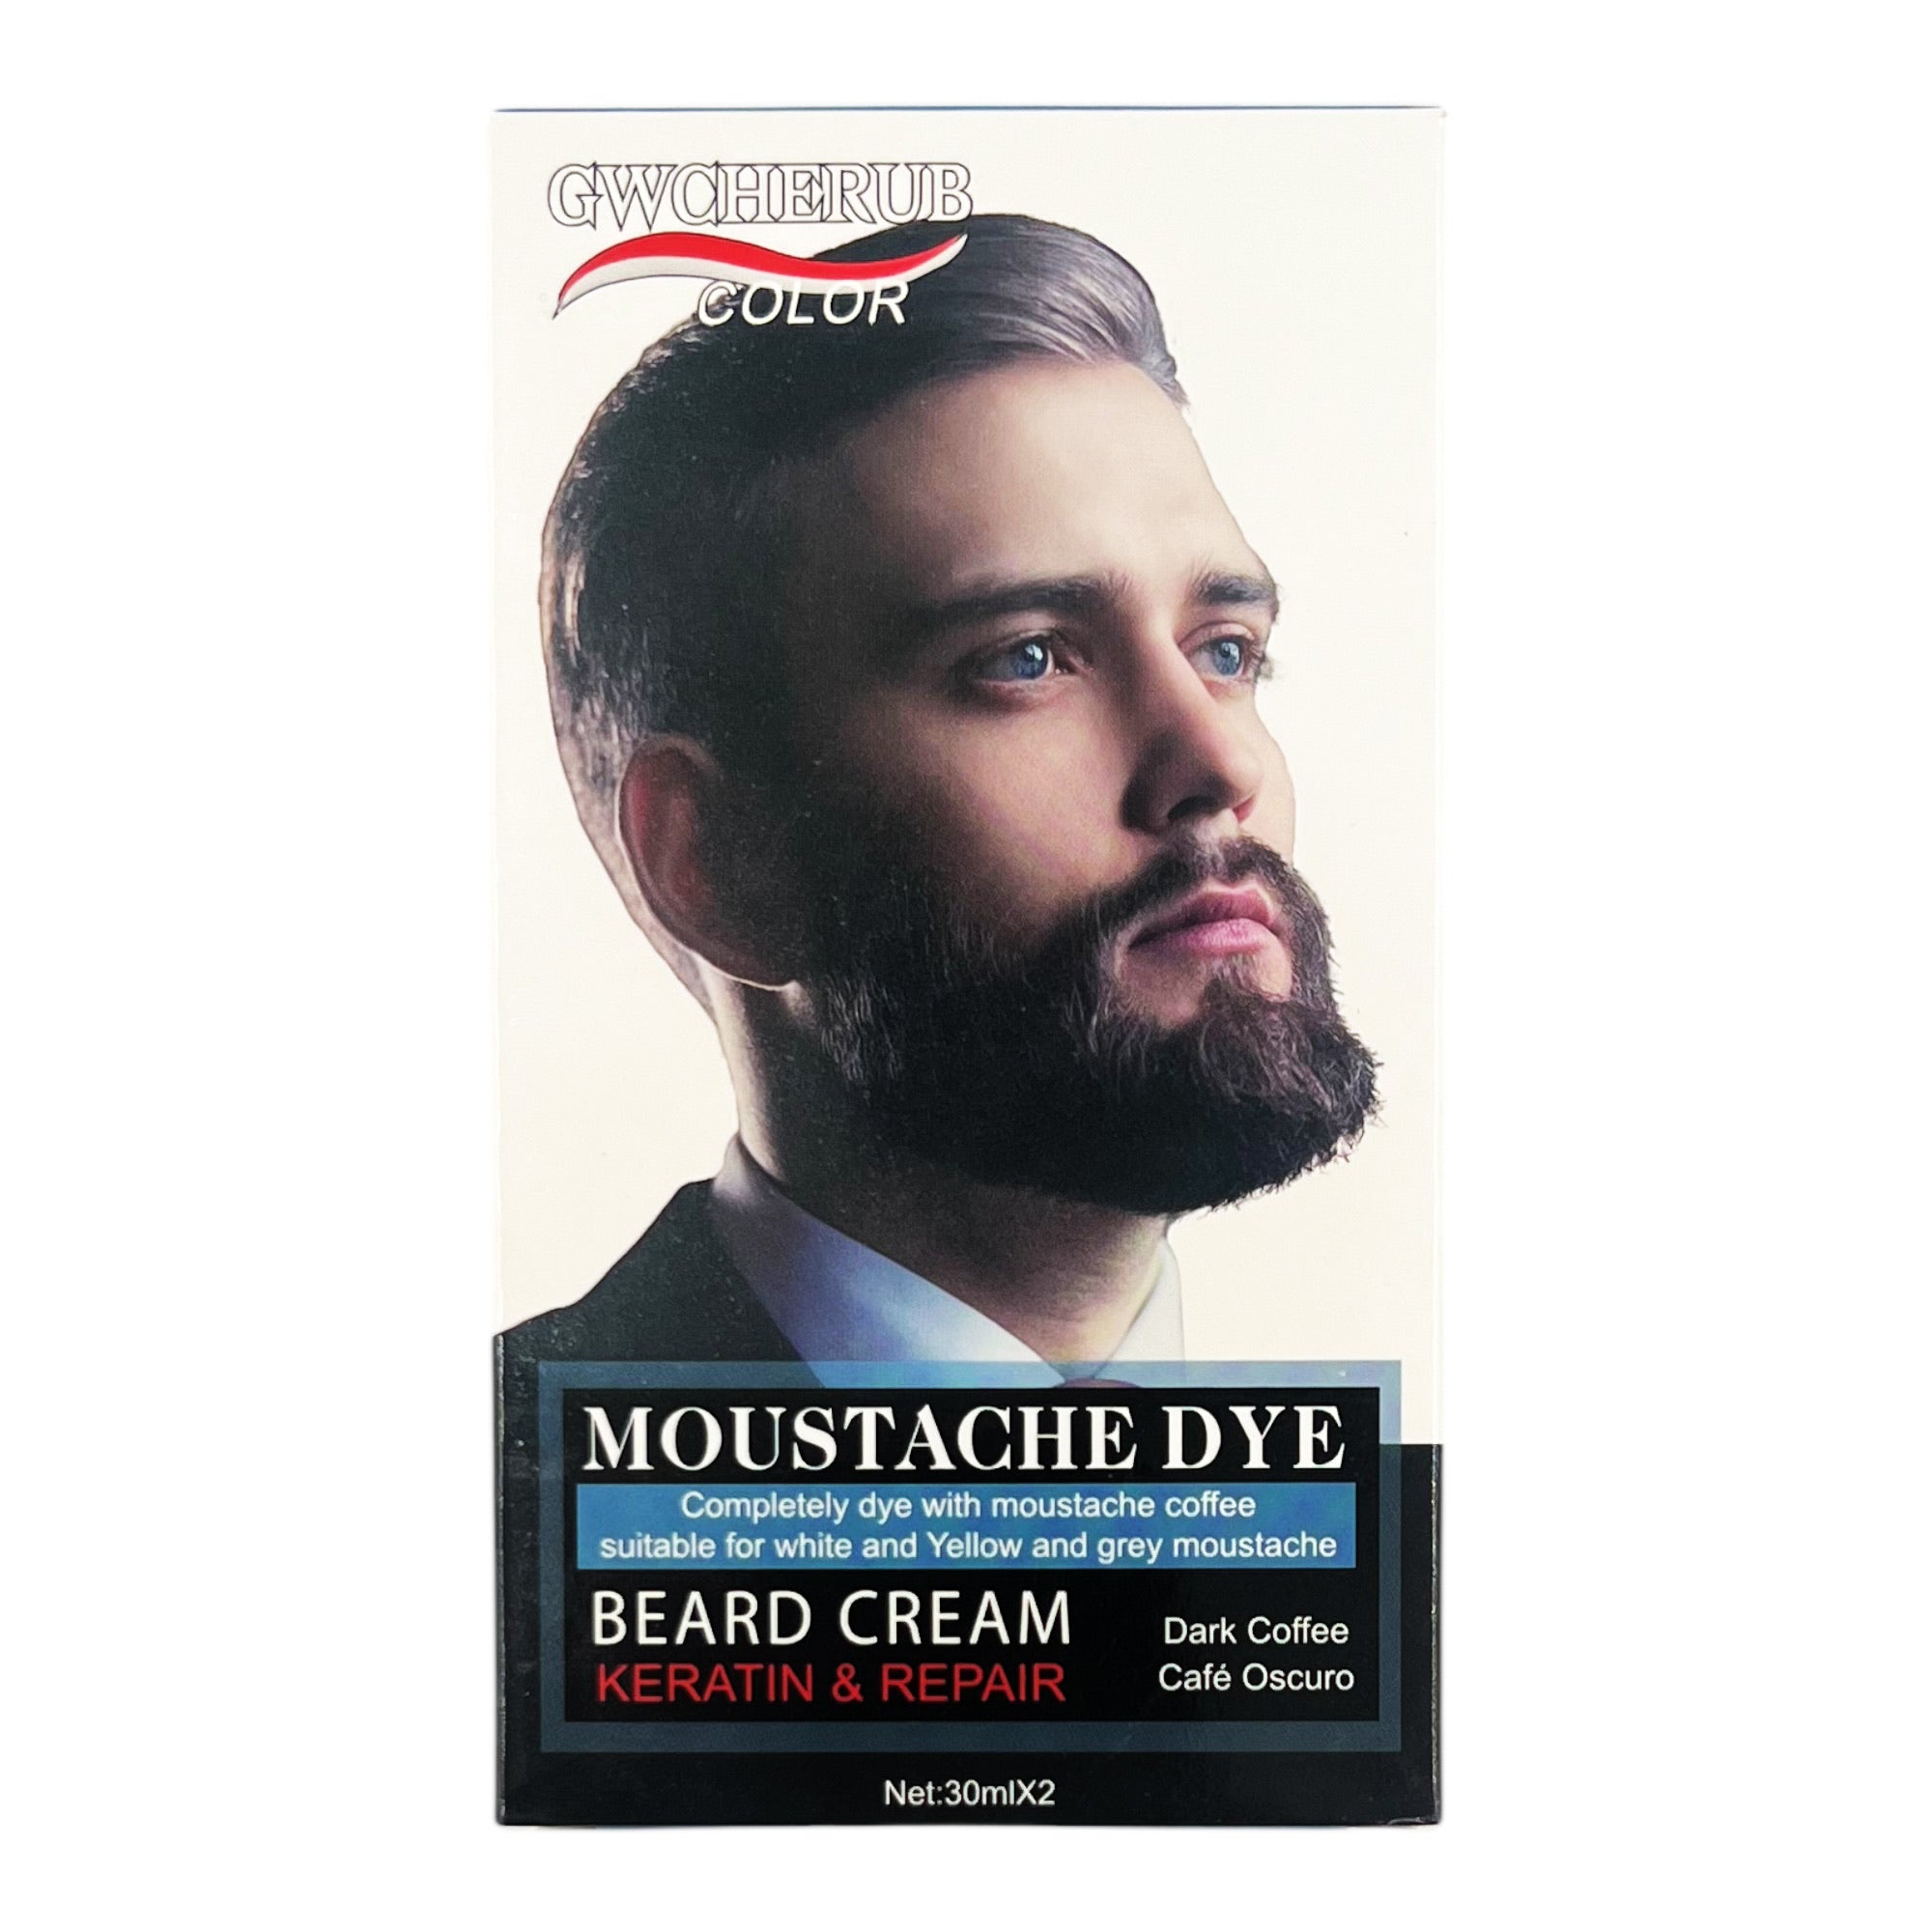 Gwcherub - Moustache Dye (Dark Coffee) 2x30ml